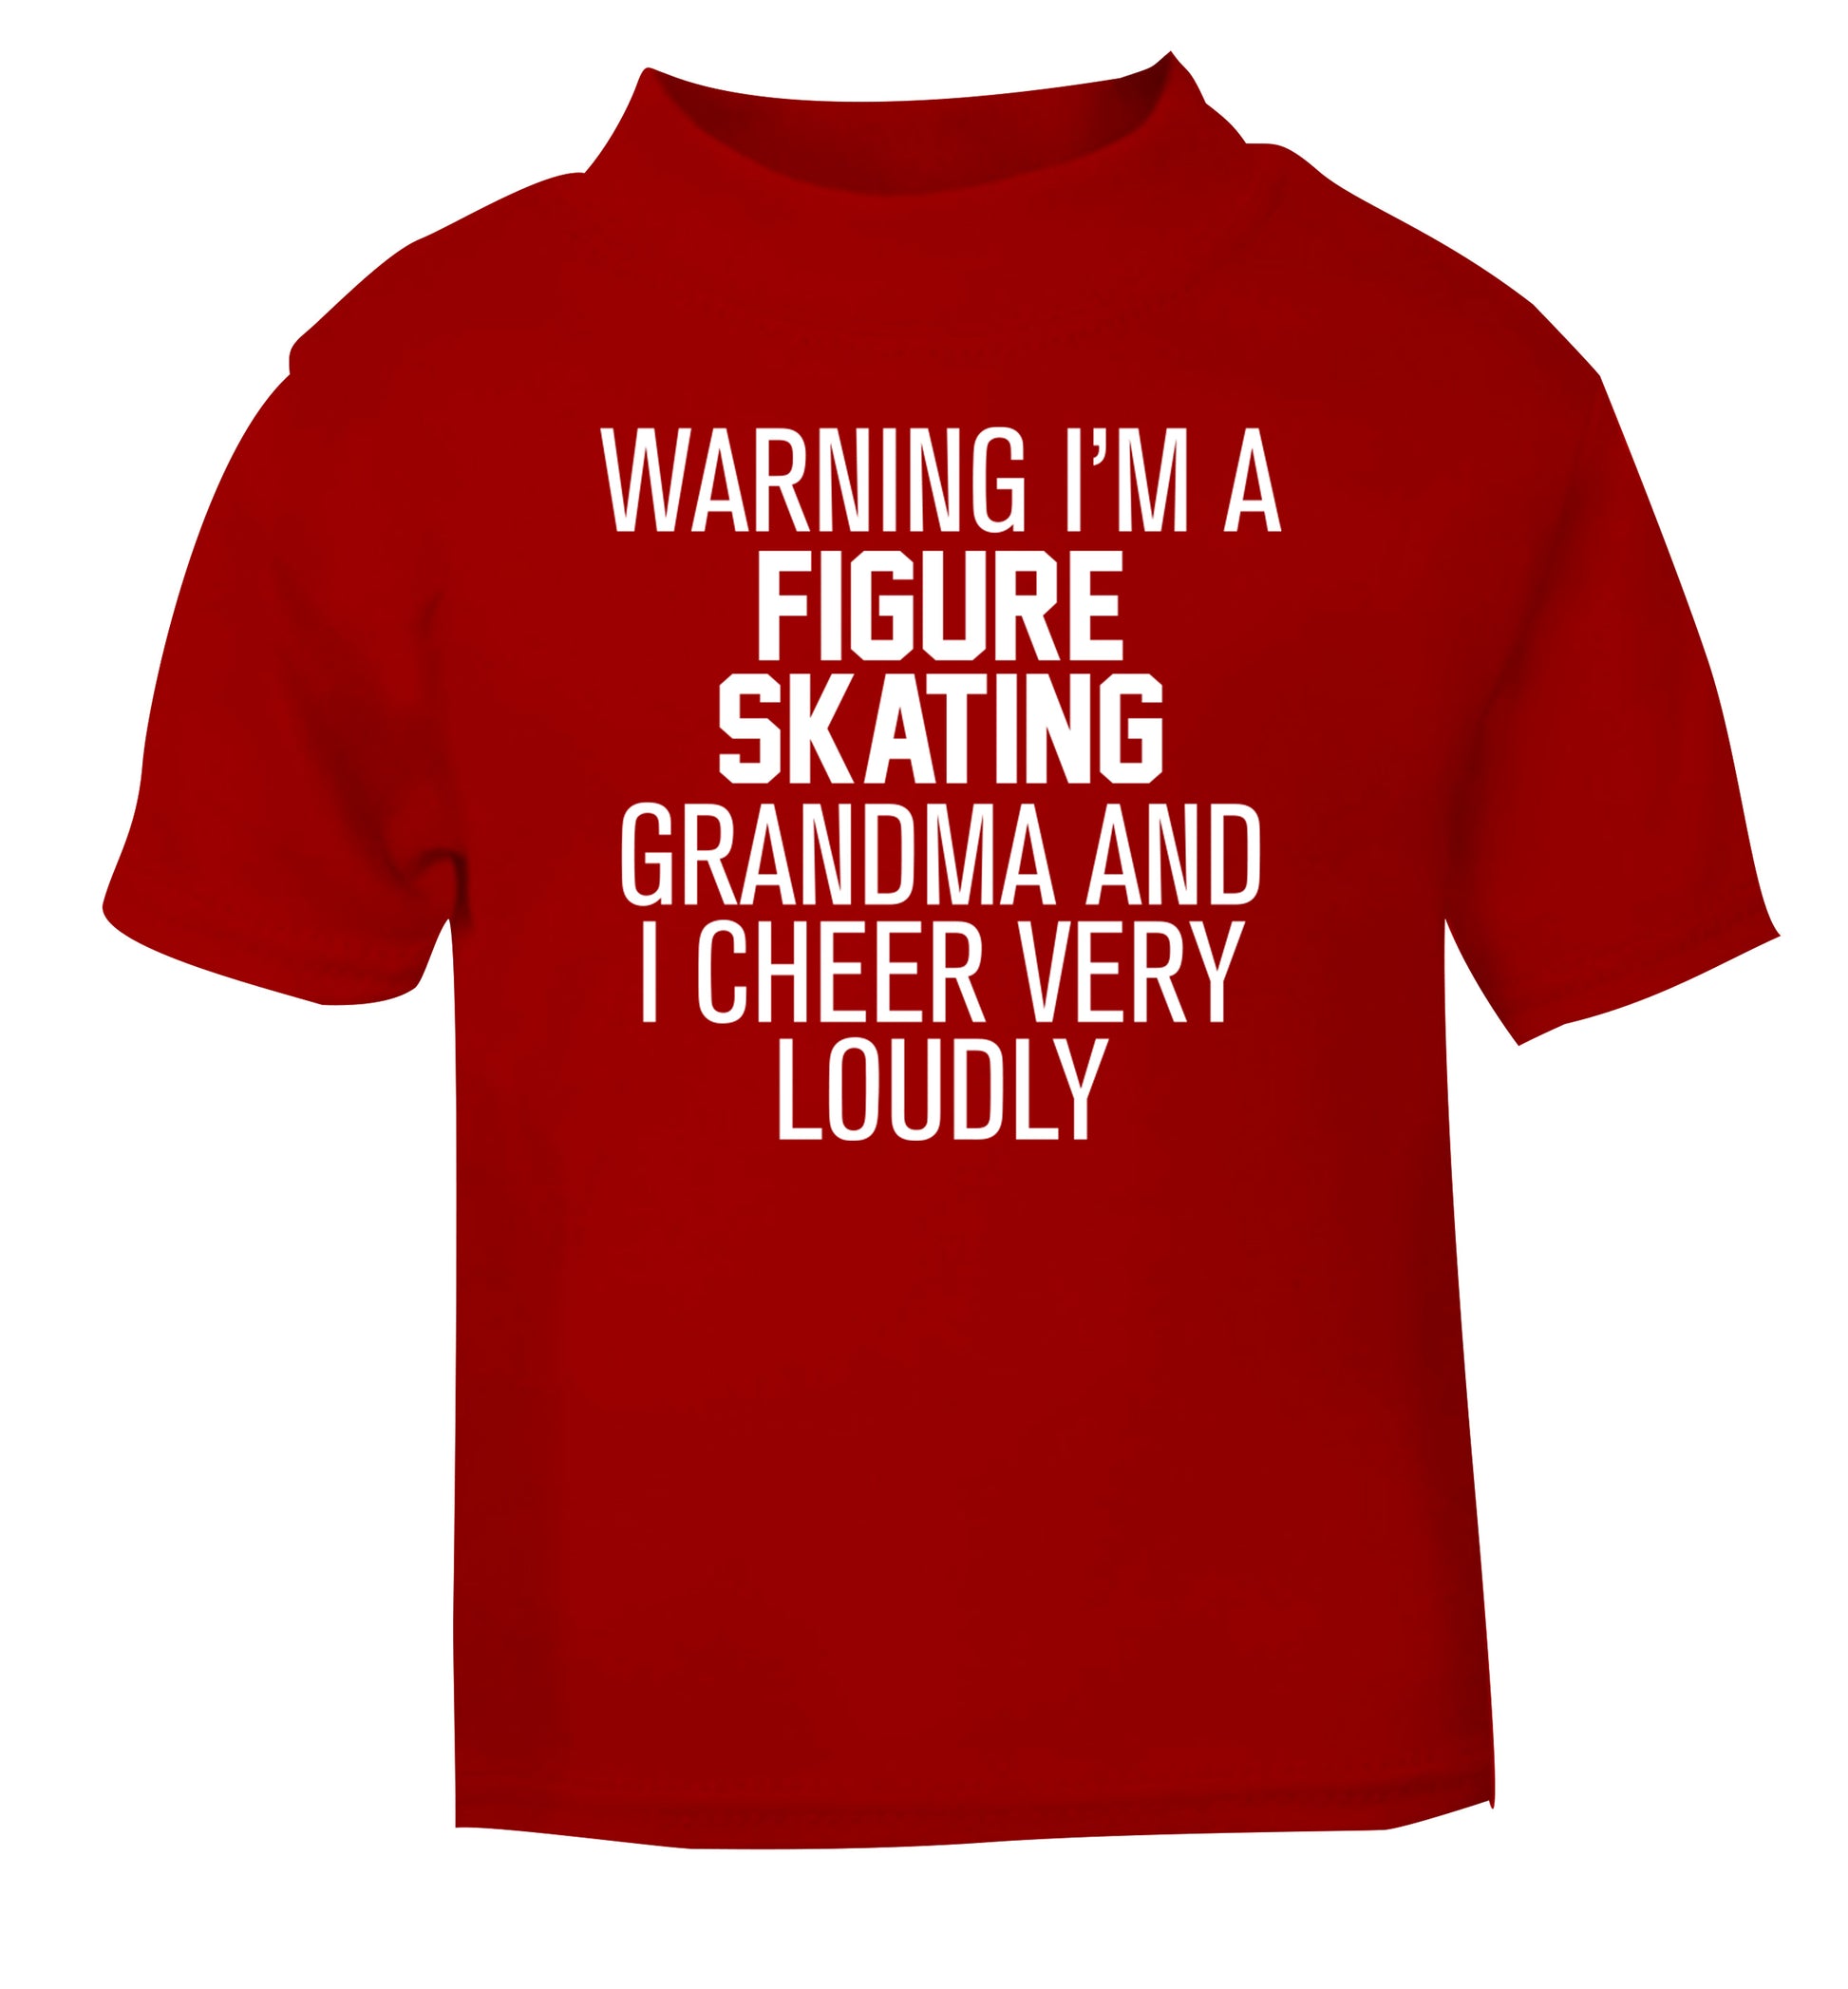 Warning I'm a figure skating grandma and I cheer very loudly red Baby Toddler Tshirt 2 Years